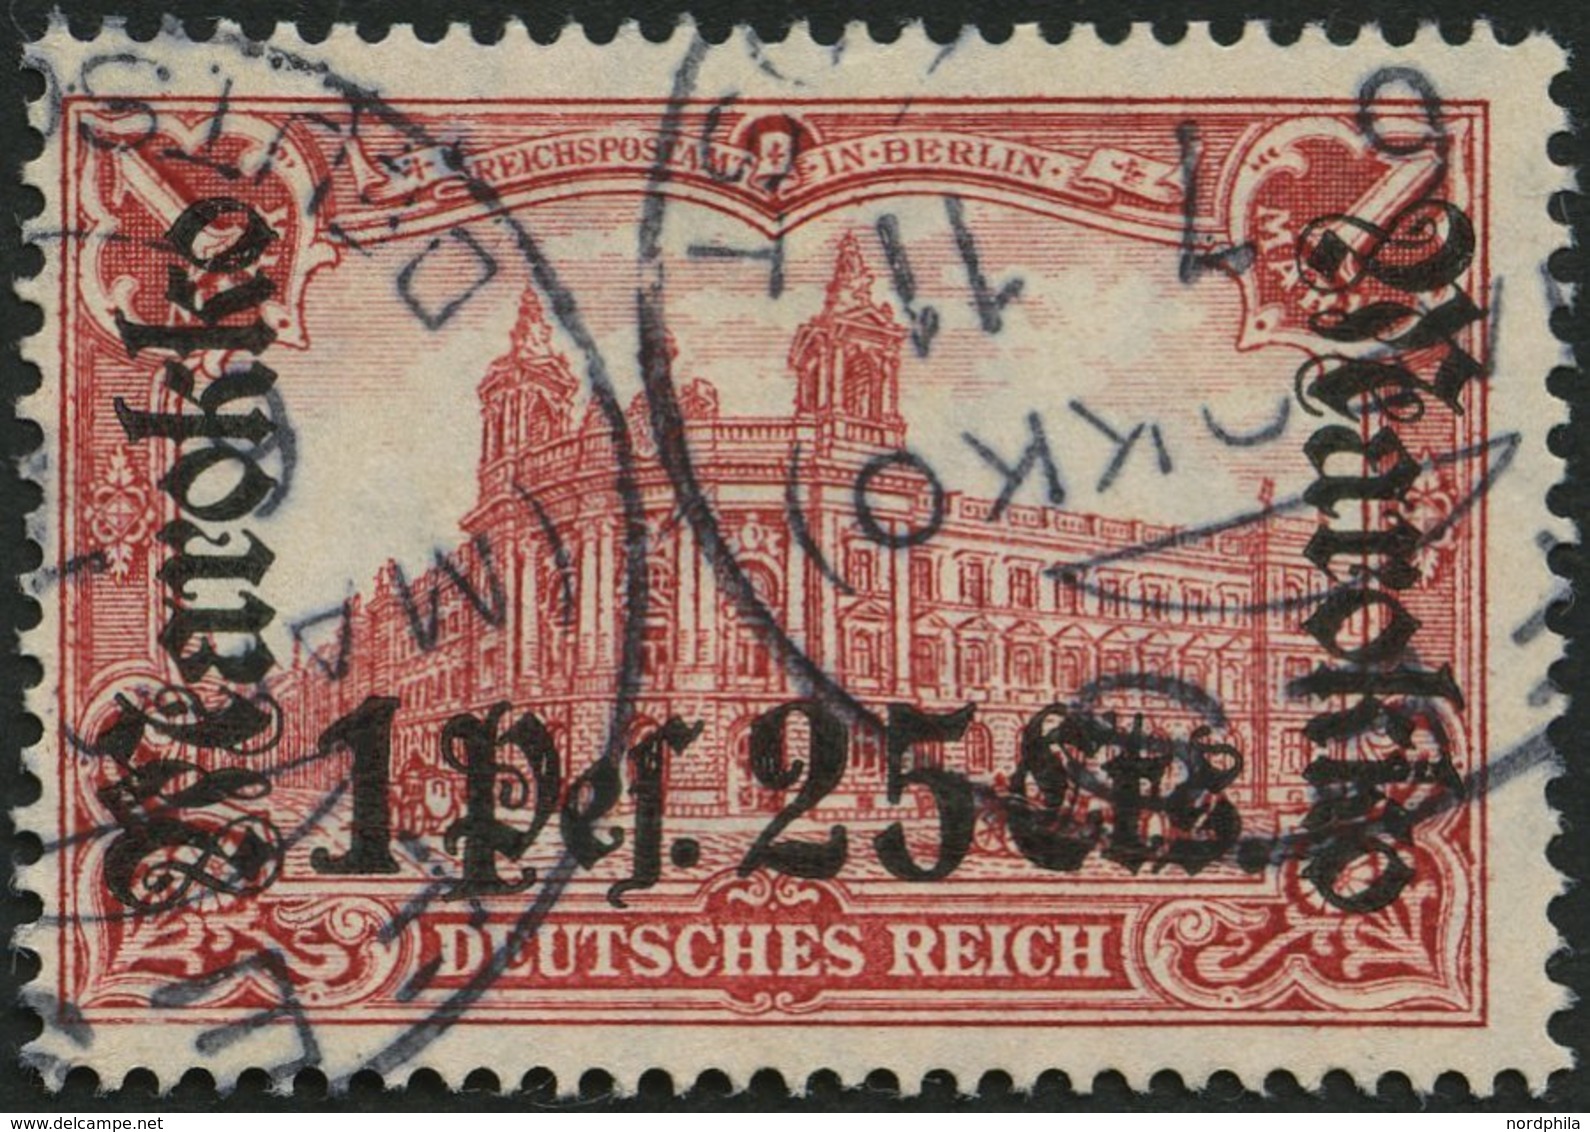 DP IN MAROKKO 55IA O, 1911, 1 P. 25 C. Auf 1 M., Friedensdruck, Stempel FES, Pracht, Gepr. W. Engel, Mi. (80.-) - Morocco (offices)